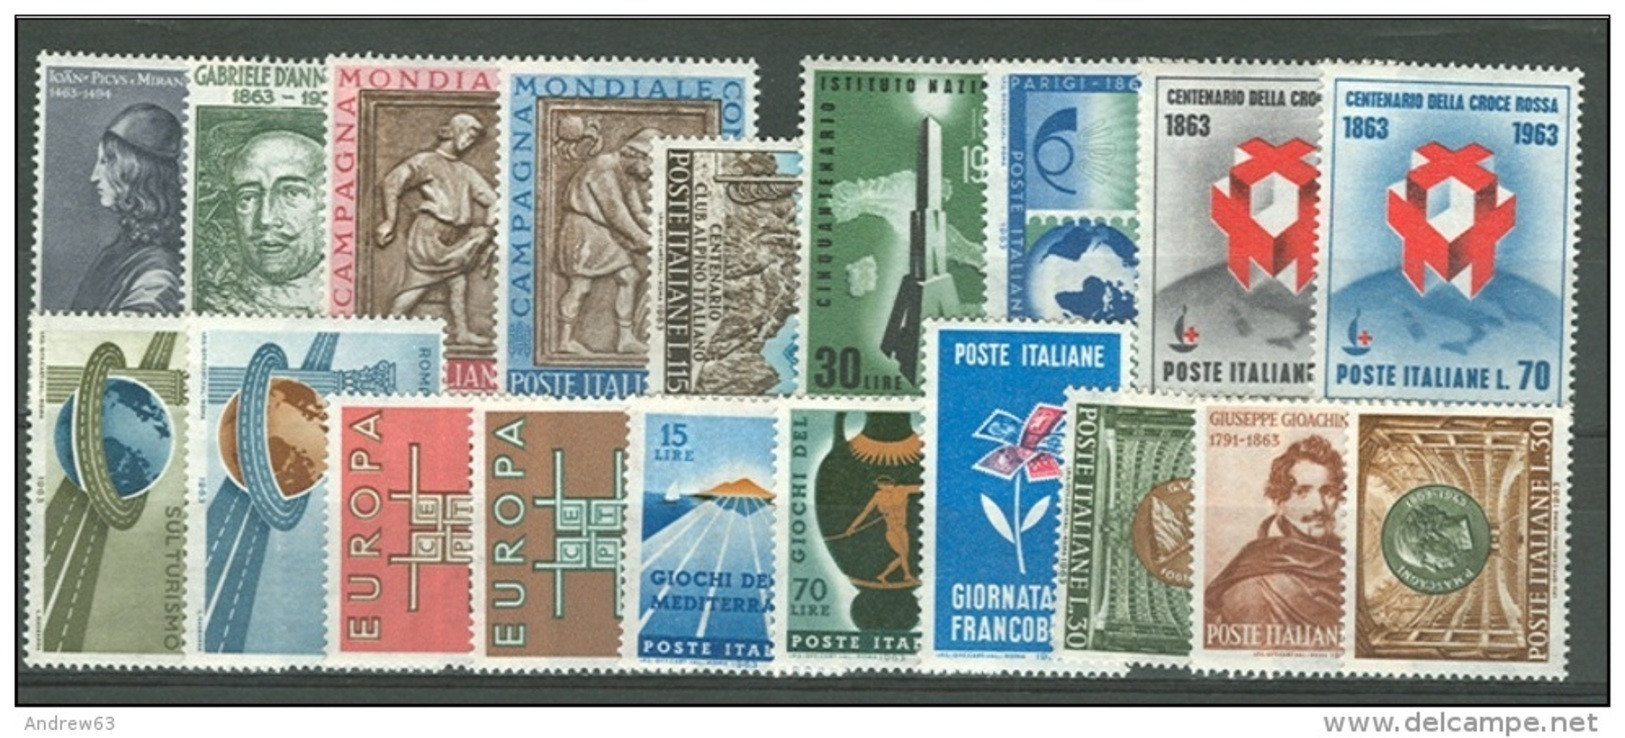 ITALIA REPUBBLICA - 1963 - Annata Completa - 19 Valori - Complete Year - ** MNH/VF - Vollständige Jahrgänge